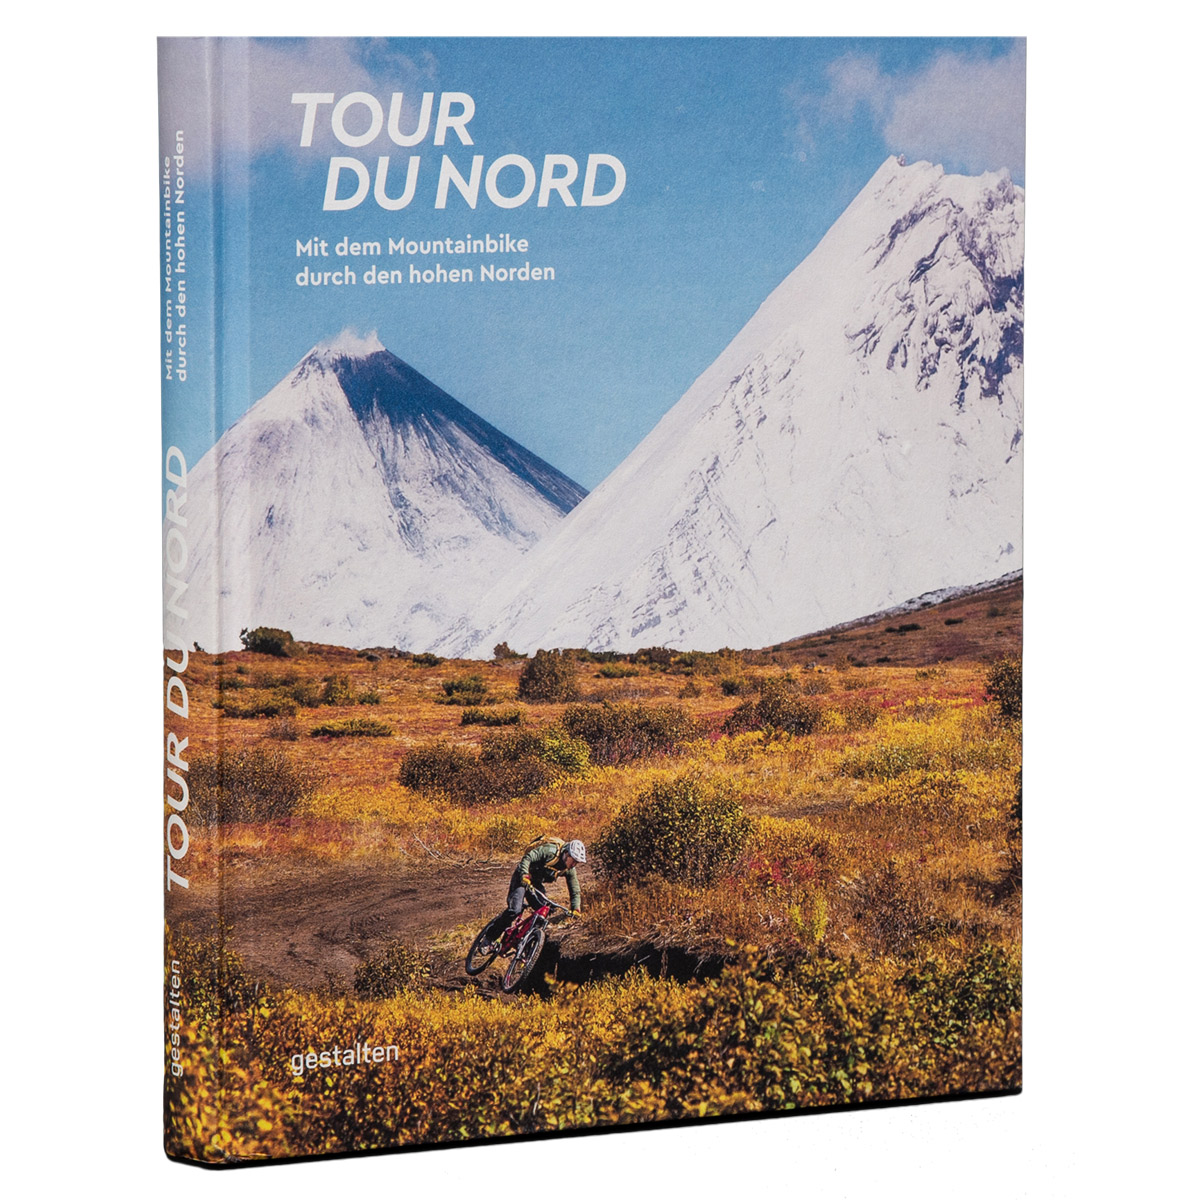 Productfoto van Tobias Woggon -  Tour du Nord: Mit dem Mountainbike durch den hohen Norden (German)